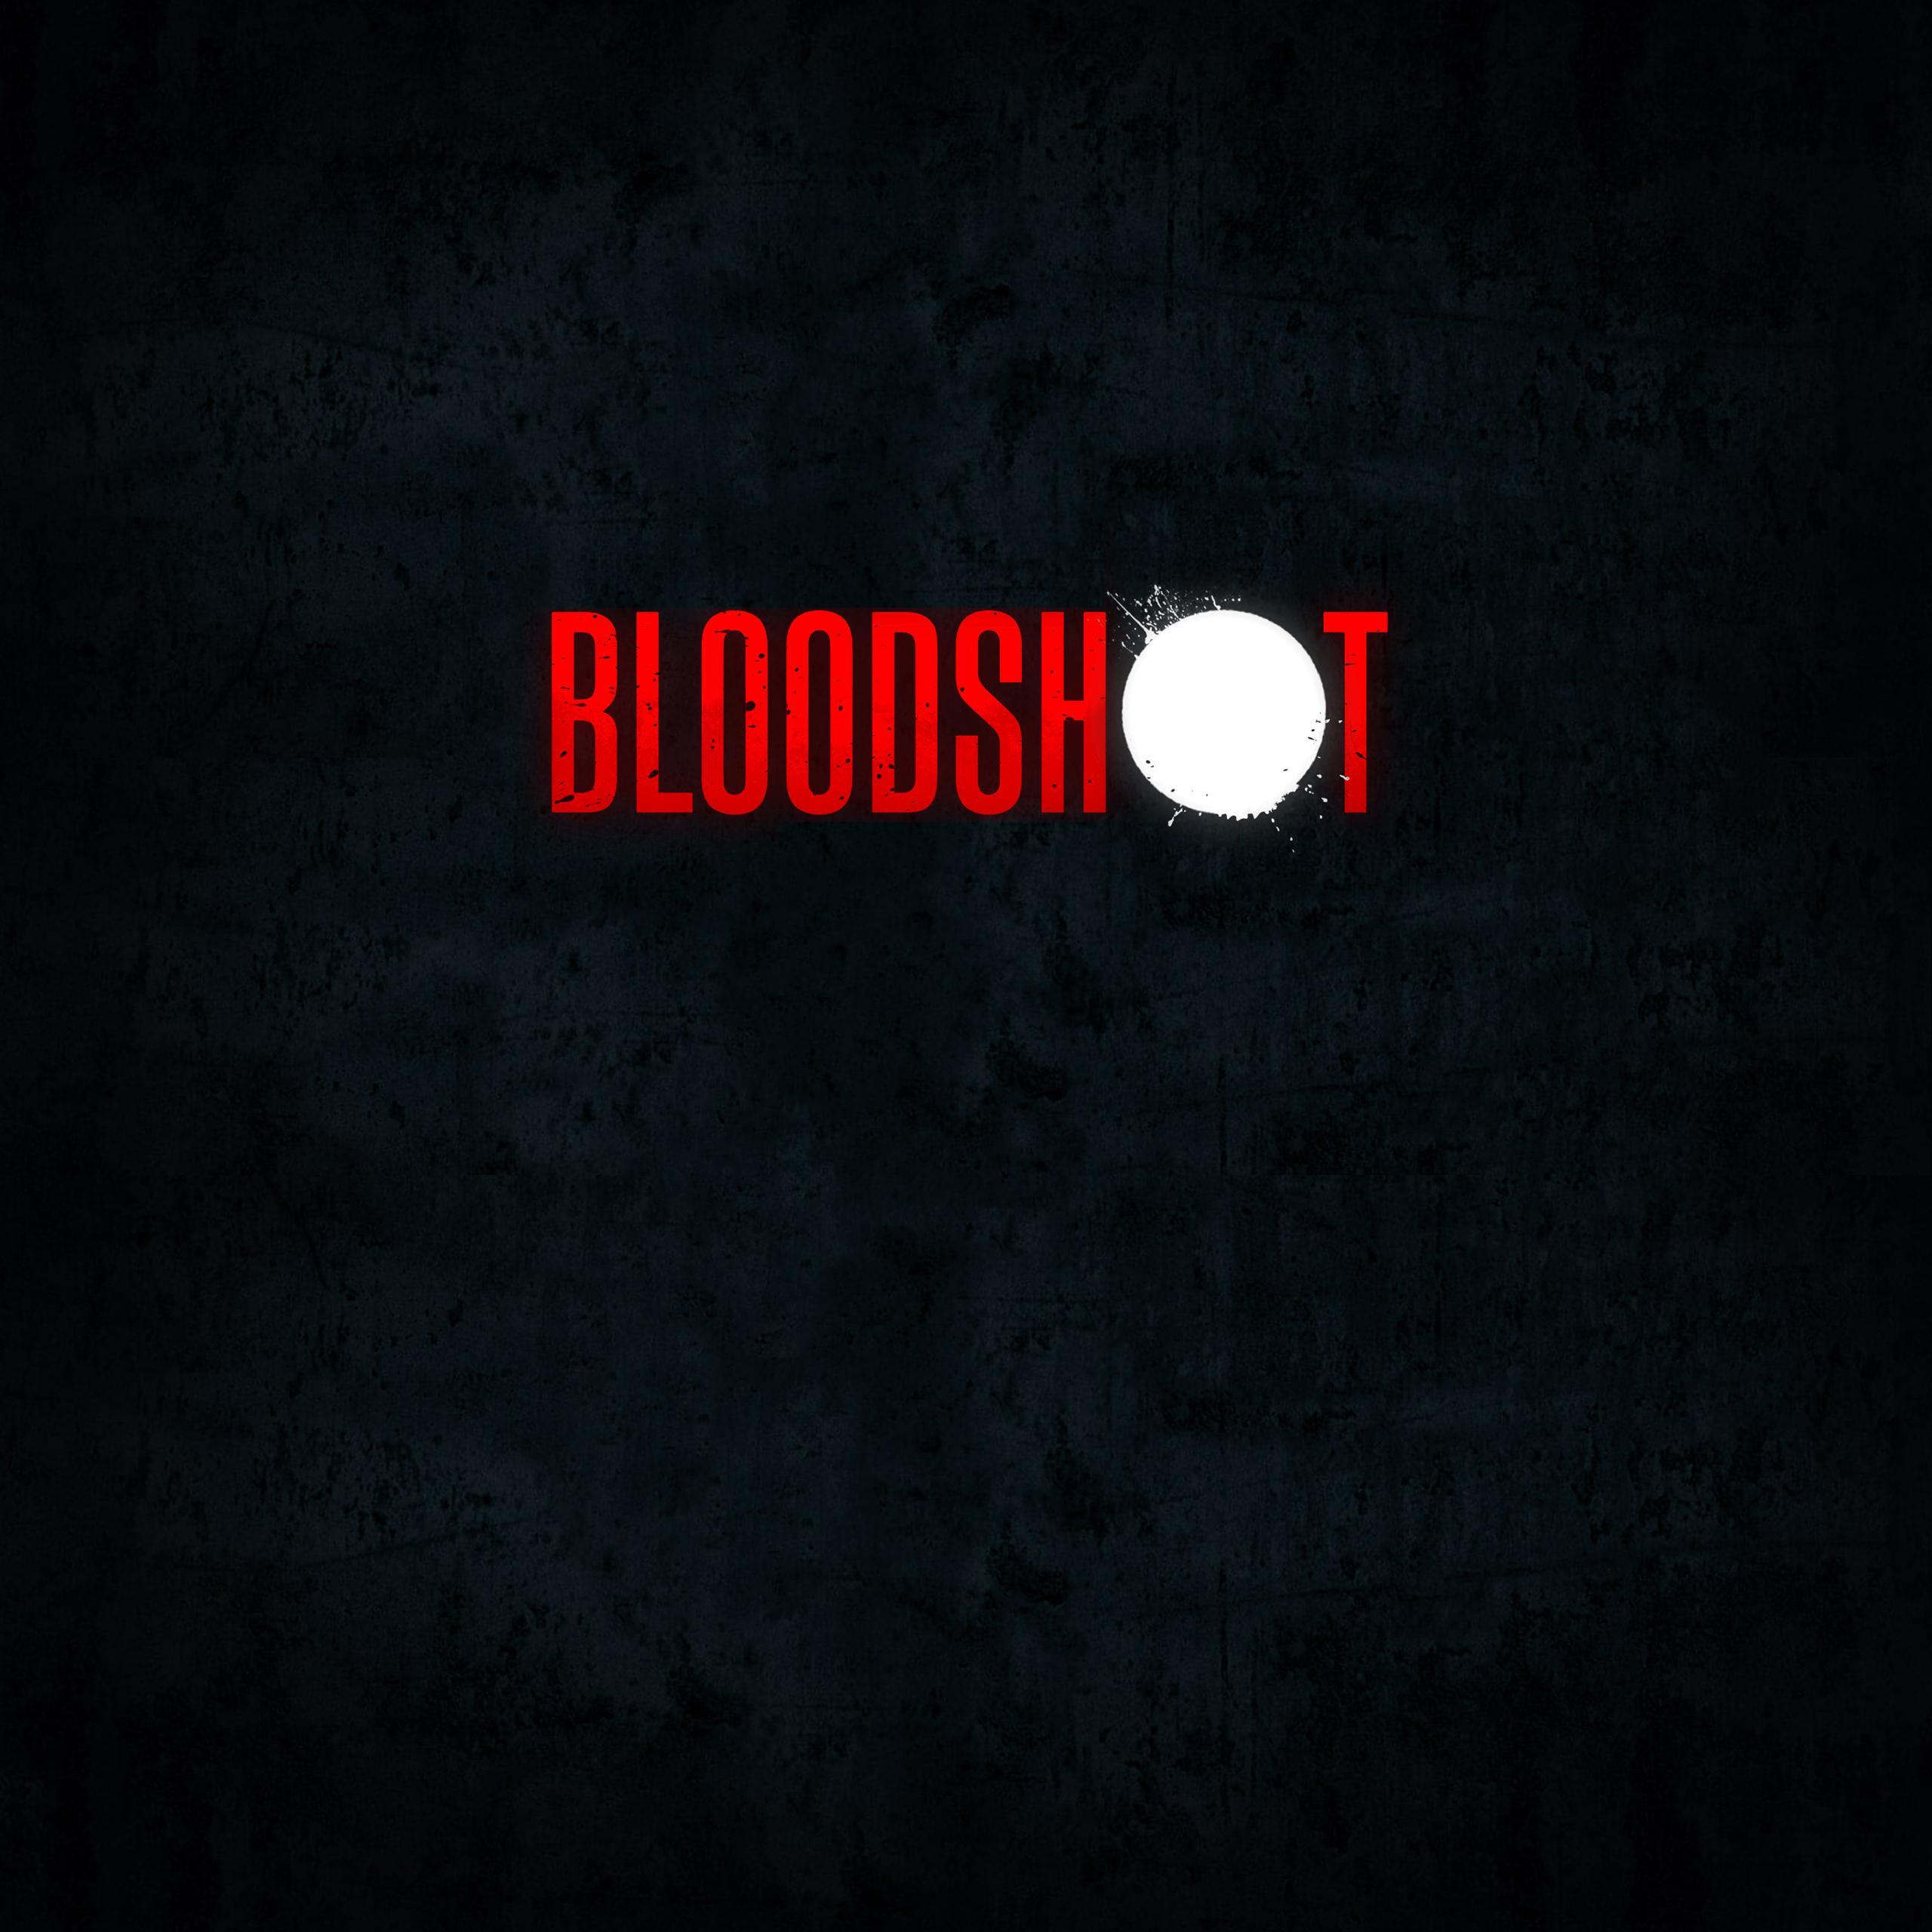 Bloodshot Movie Logo Wallpaper, HD Movies 4K Wallpaper